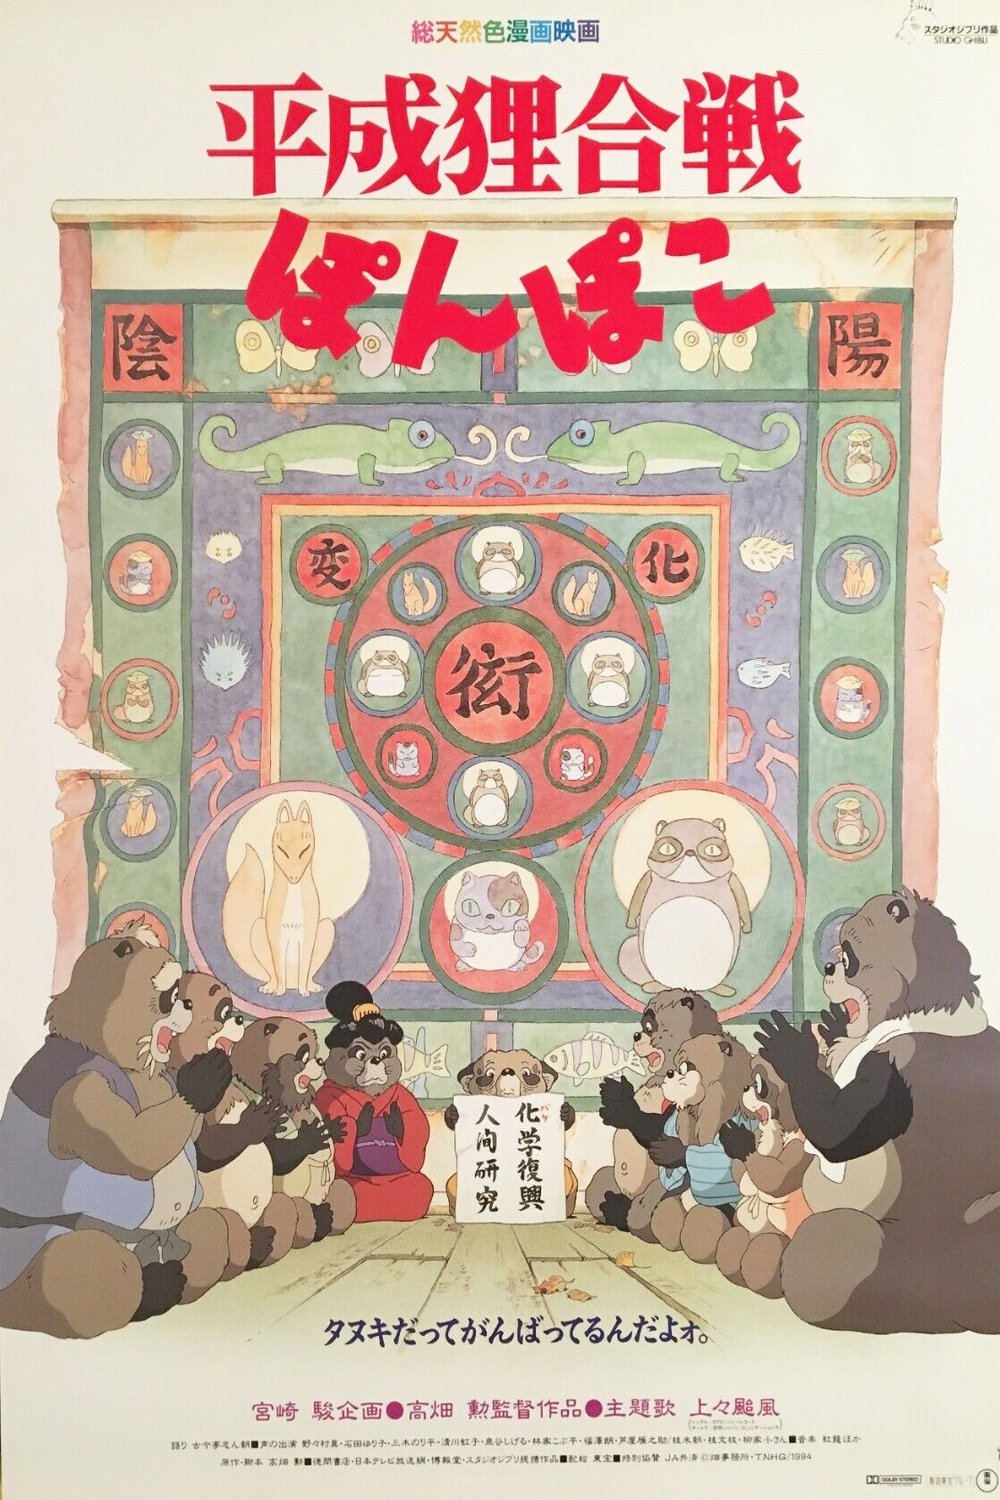 Japanese poster of the movie Pom Poko